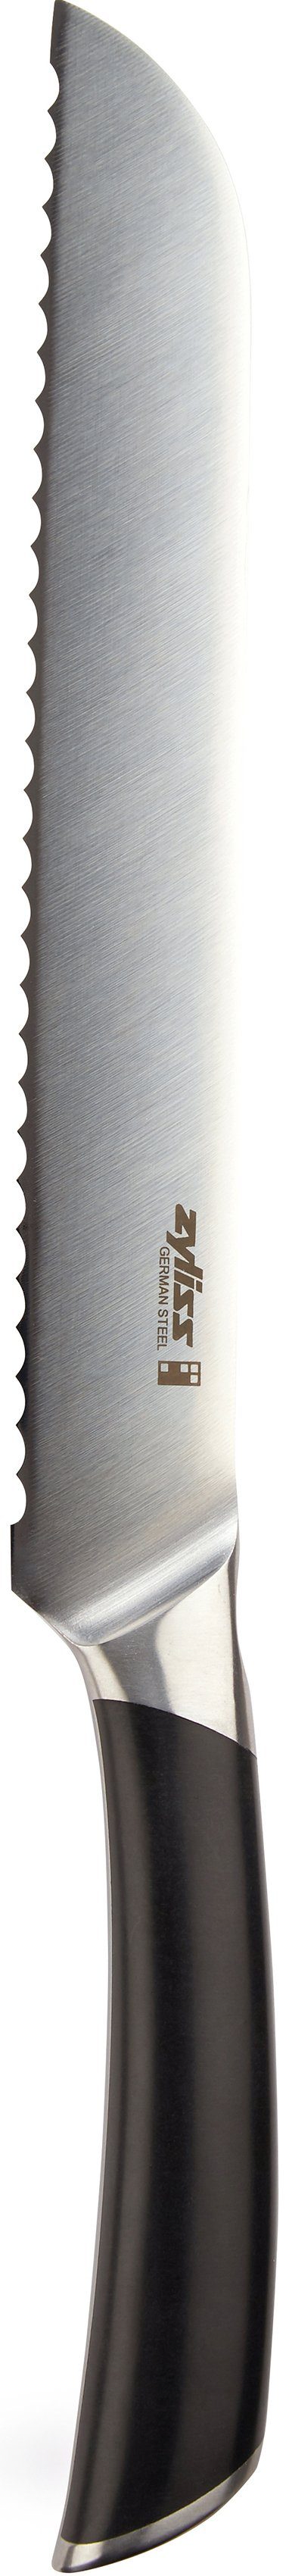 zyliss Brotmesser Comfort Pro, Deutscher Edelstahl langlebig ergonomisch geformt